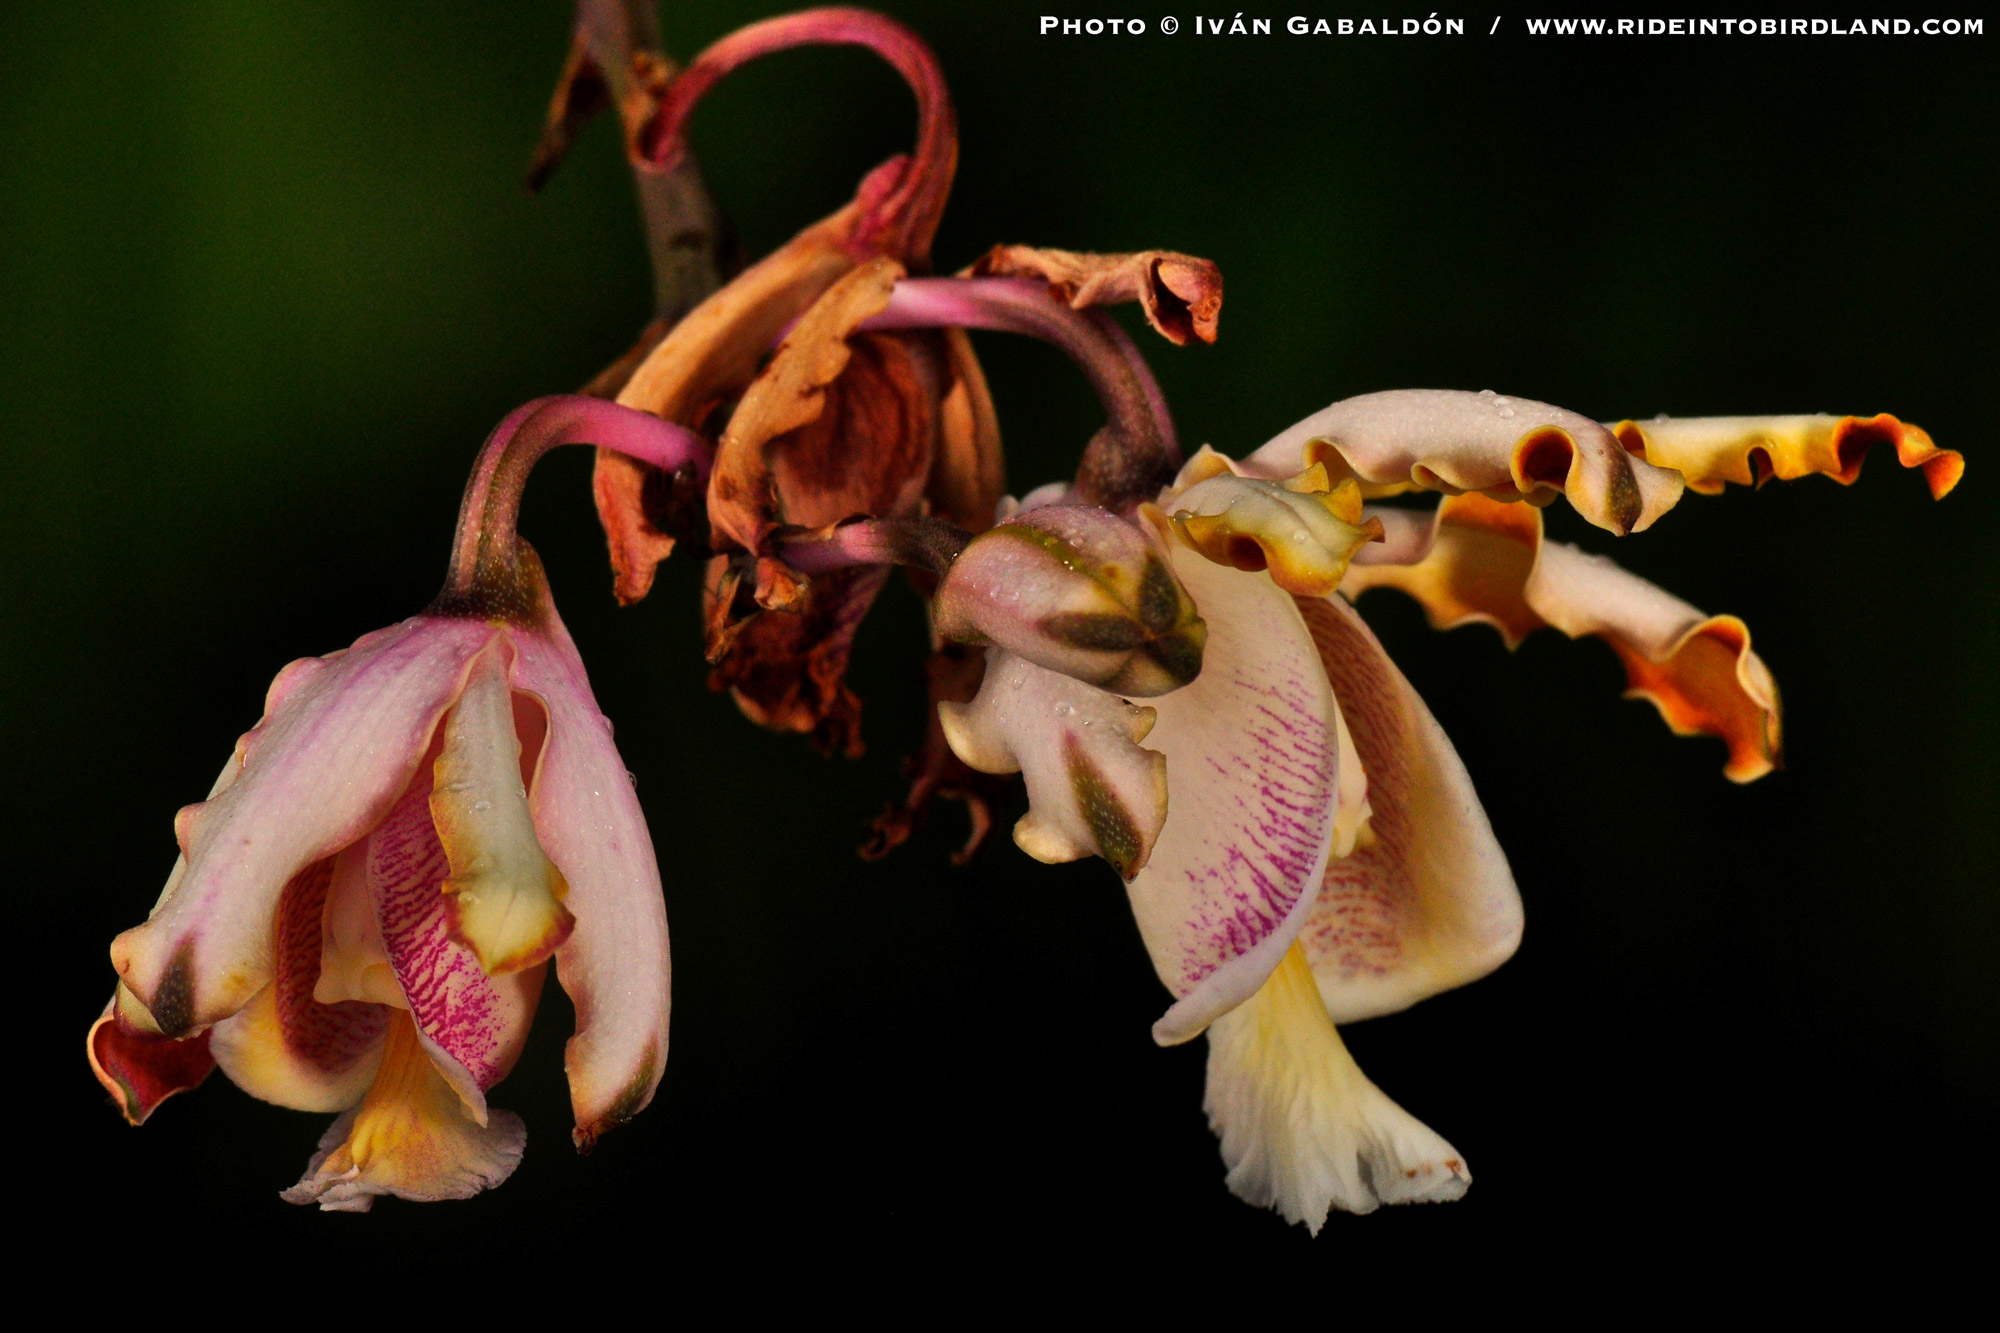 Open flower of Myrmecophila christinae, orchid species endemic to the Yucatan Peninsula. (Photo © Iván Gabaldón).